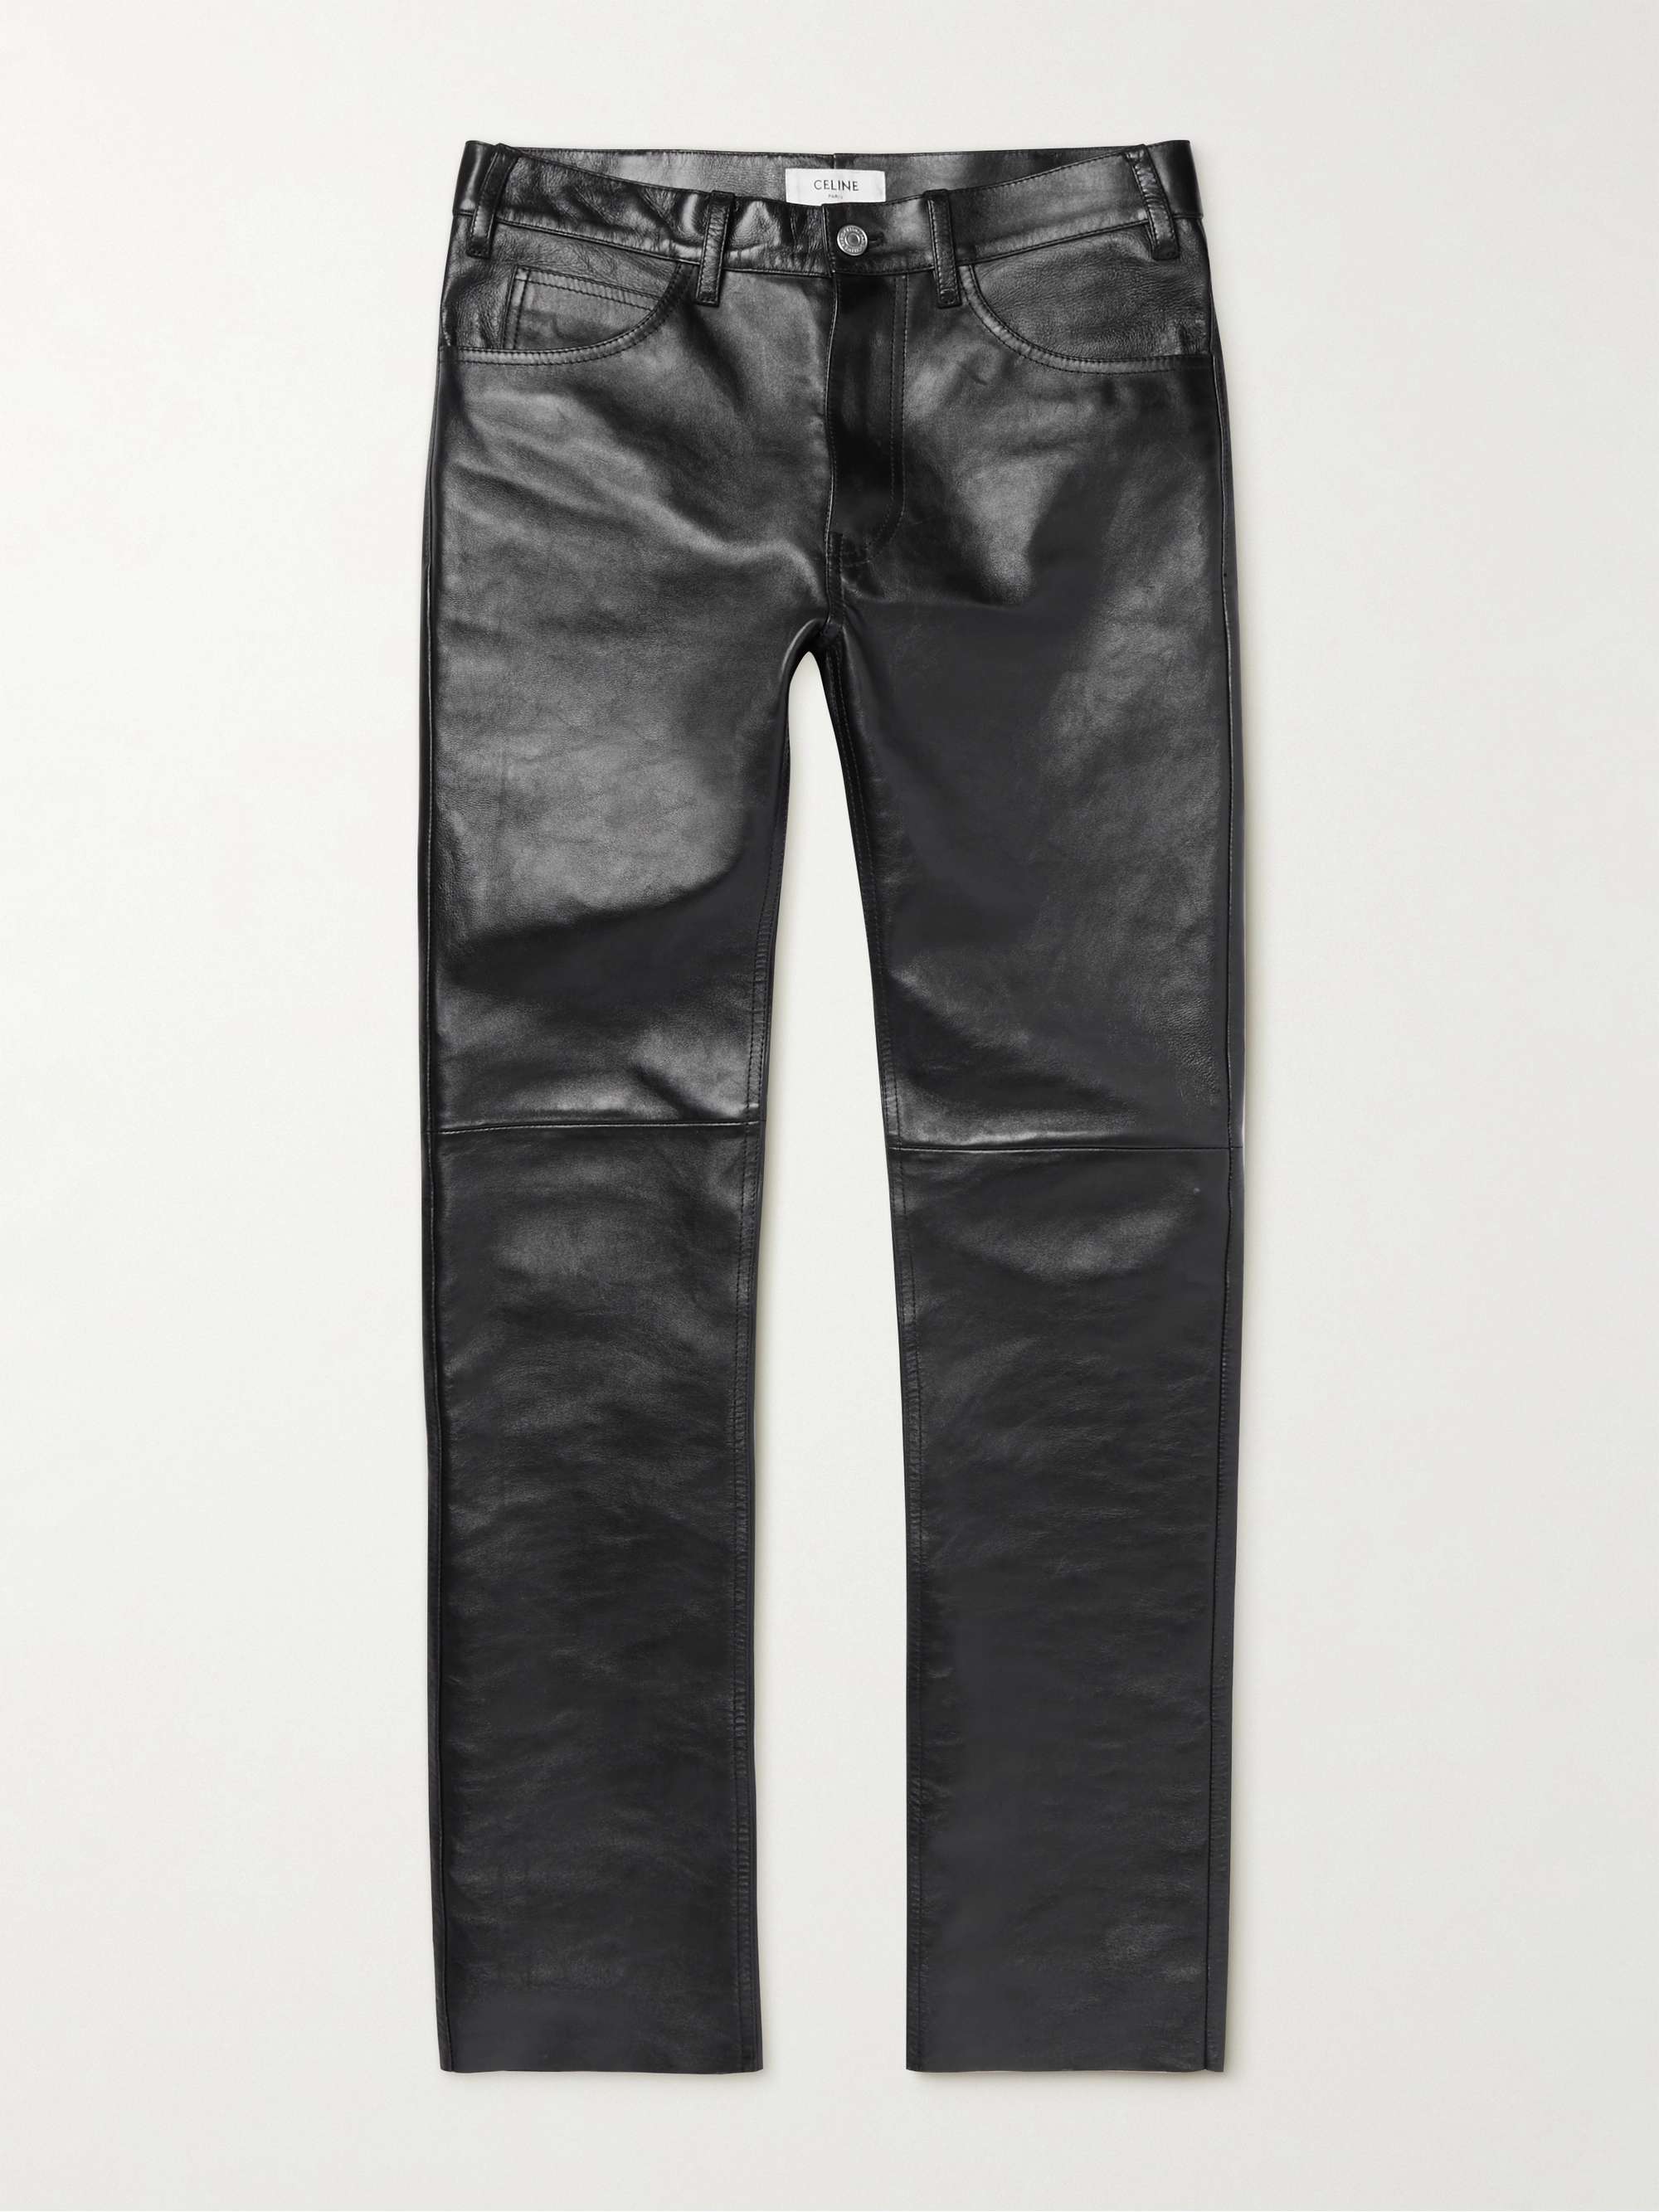 CELINE HOMME Panelled Full-Grain Leather Trousers